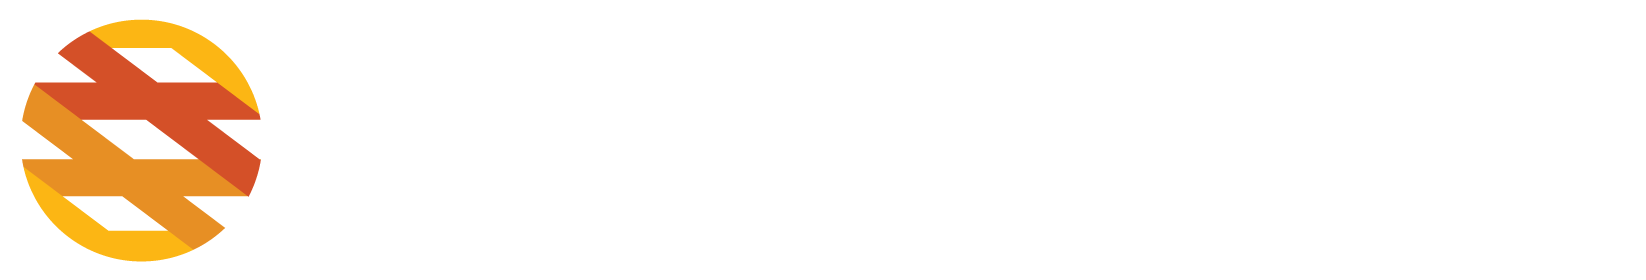 Sunlight Financial Logo PNG image